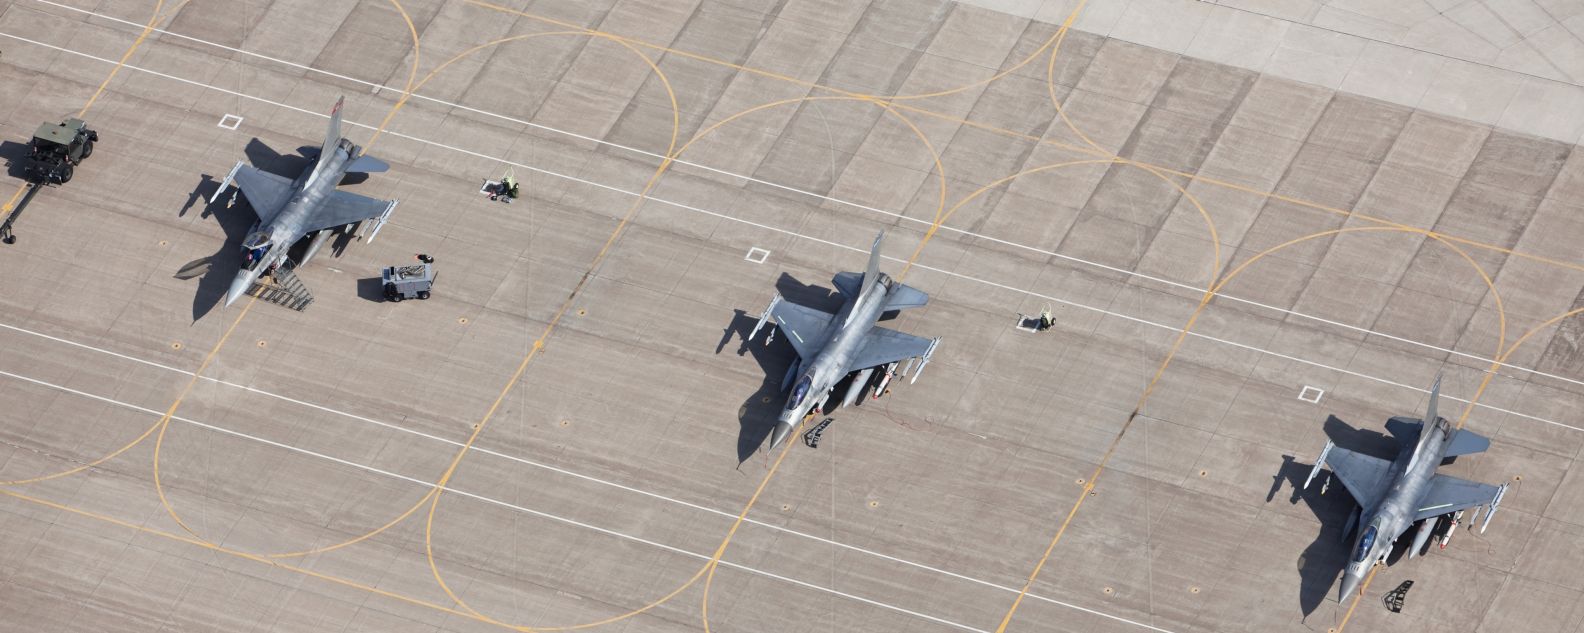 Three F-16 Fighter Jets on Tarmac Ready for Flight